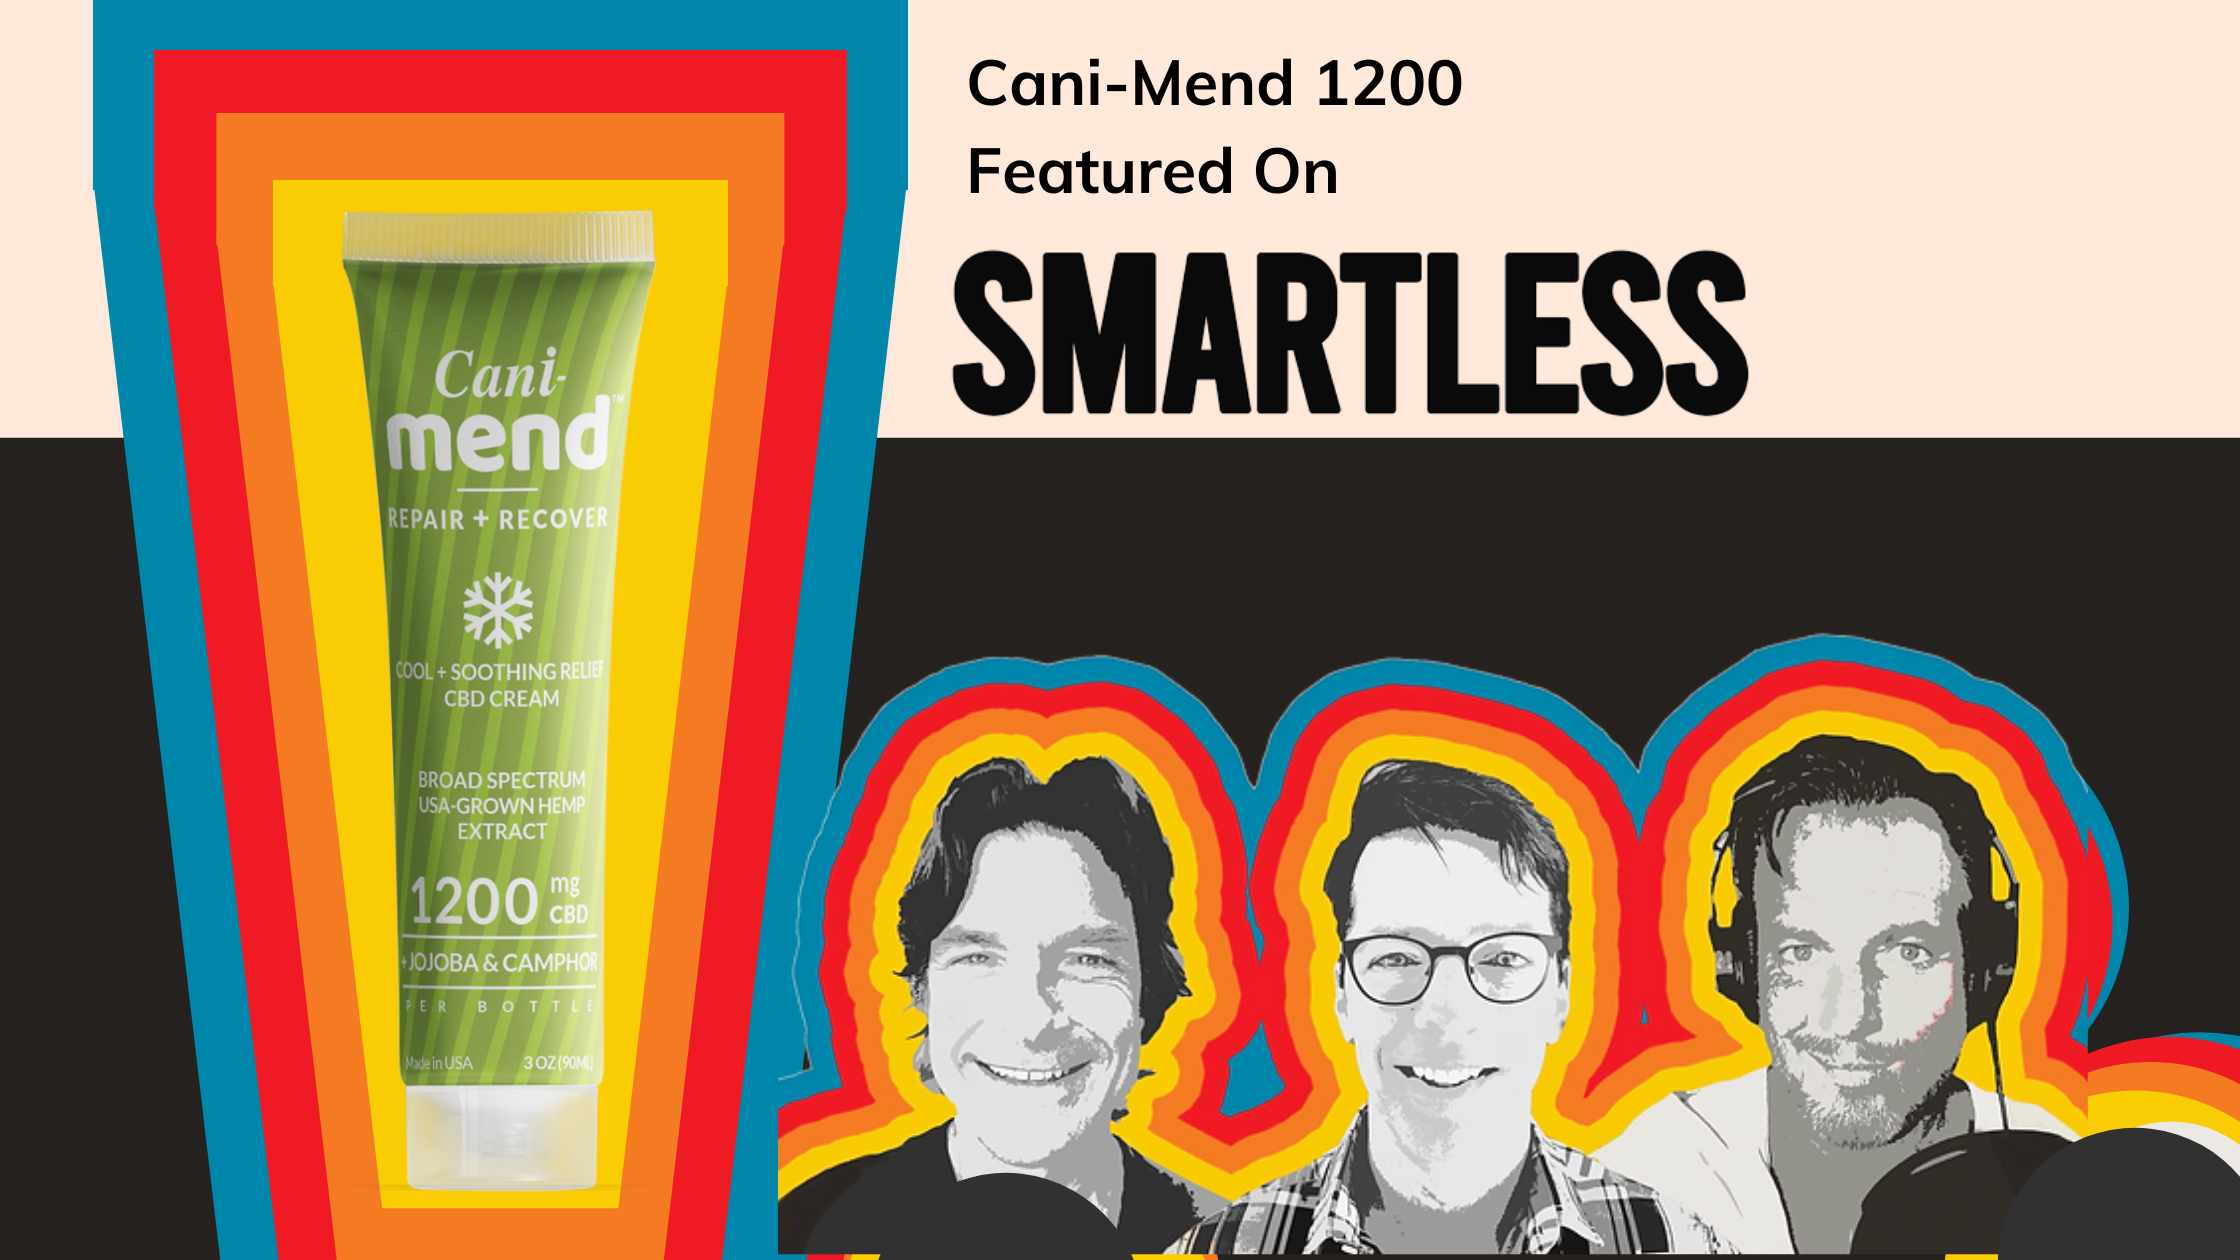 Cani Ease, Cani 1200, Cani Golf, Cani Something? Jason Bateman Gives Cani-Mend CBD Cream a Shoutout on Smartless!